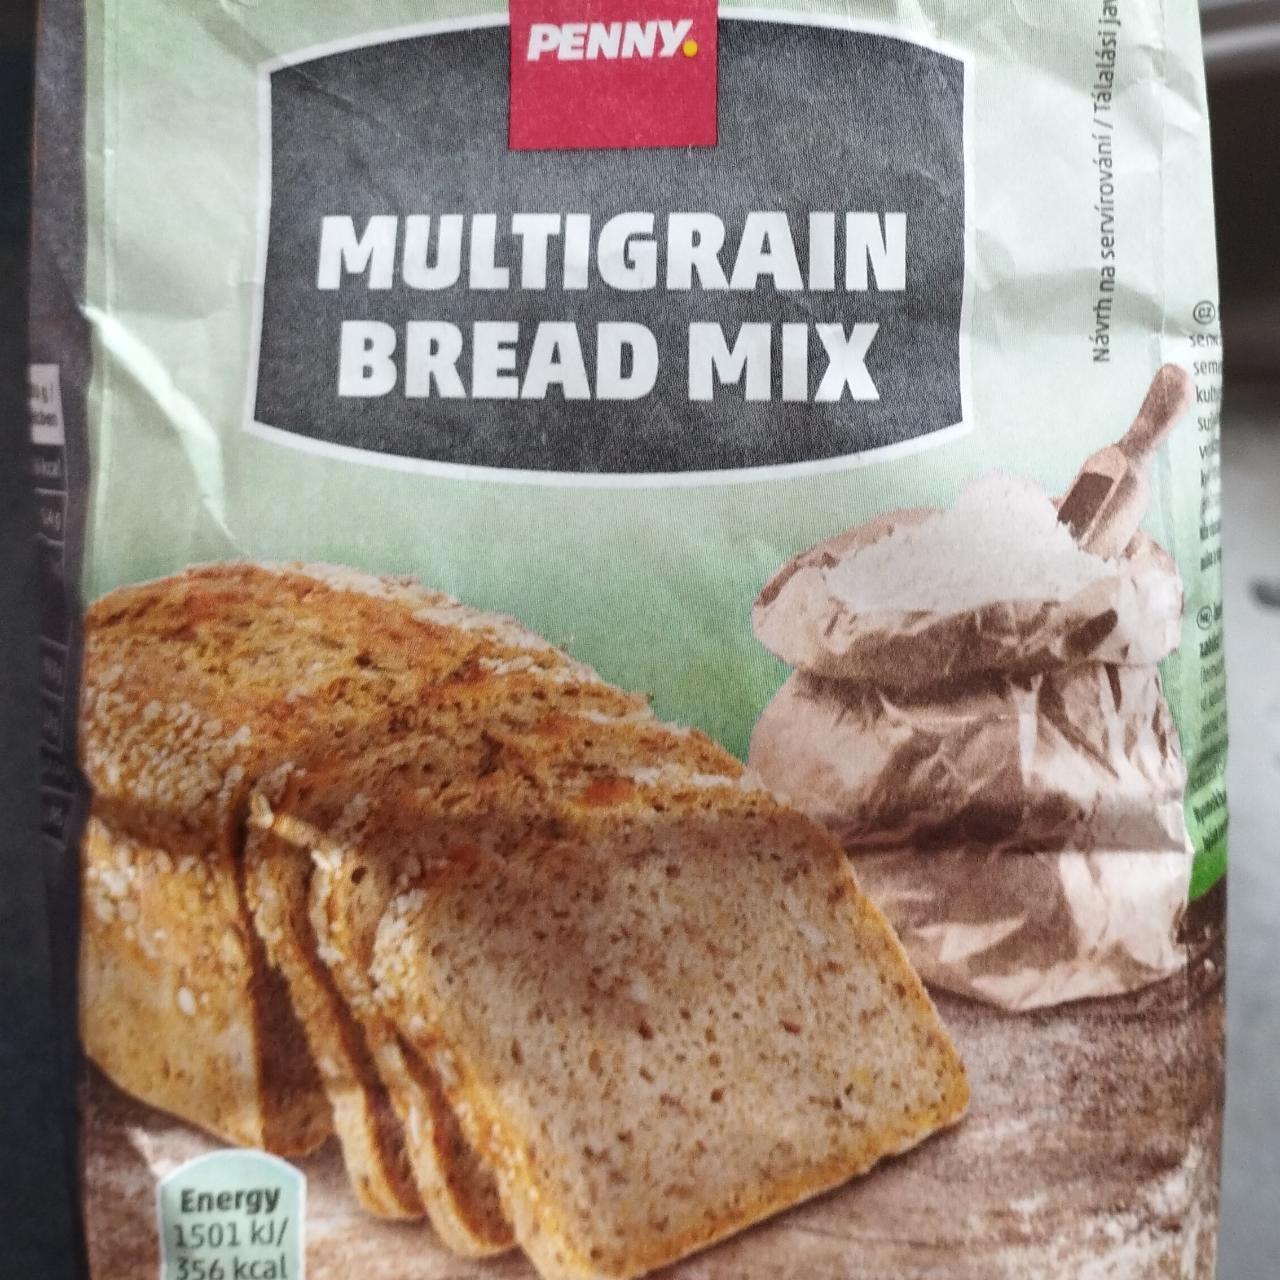 Képek - Multigrain bread mix Penny